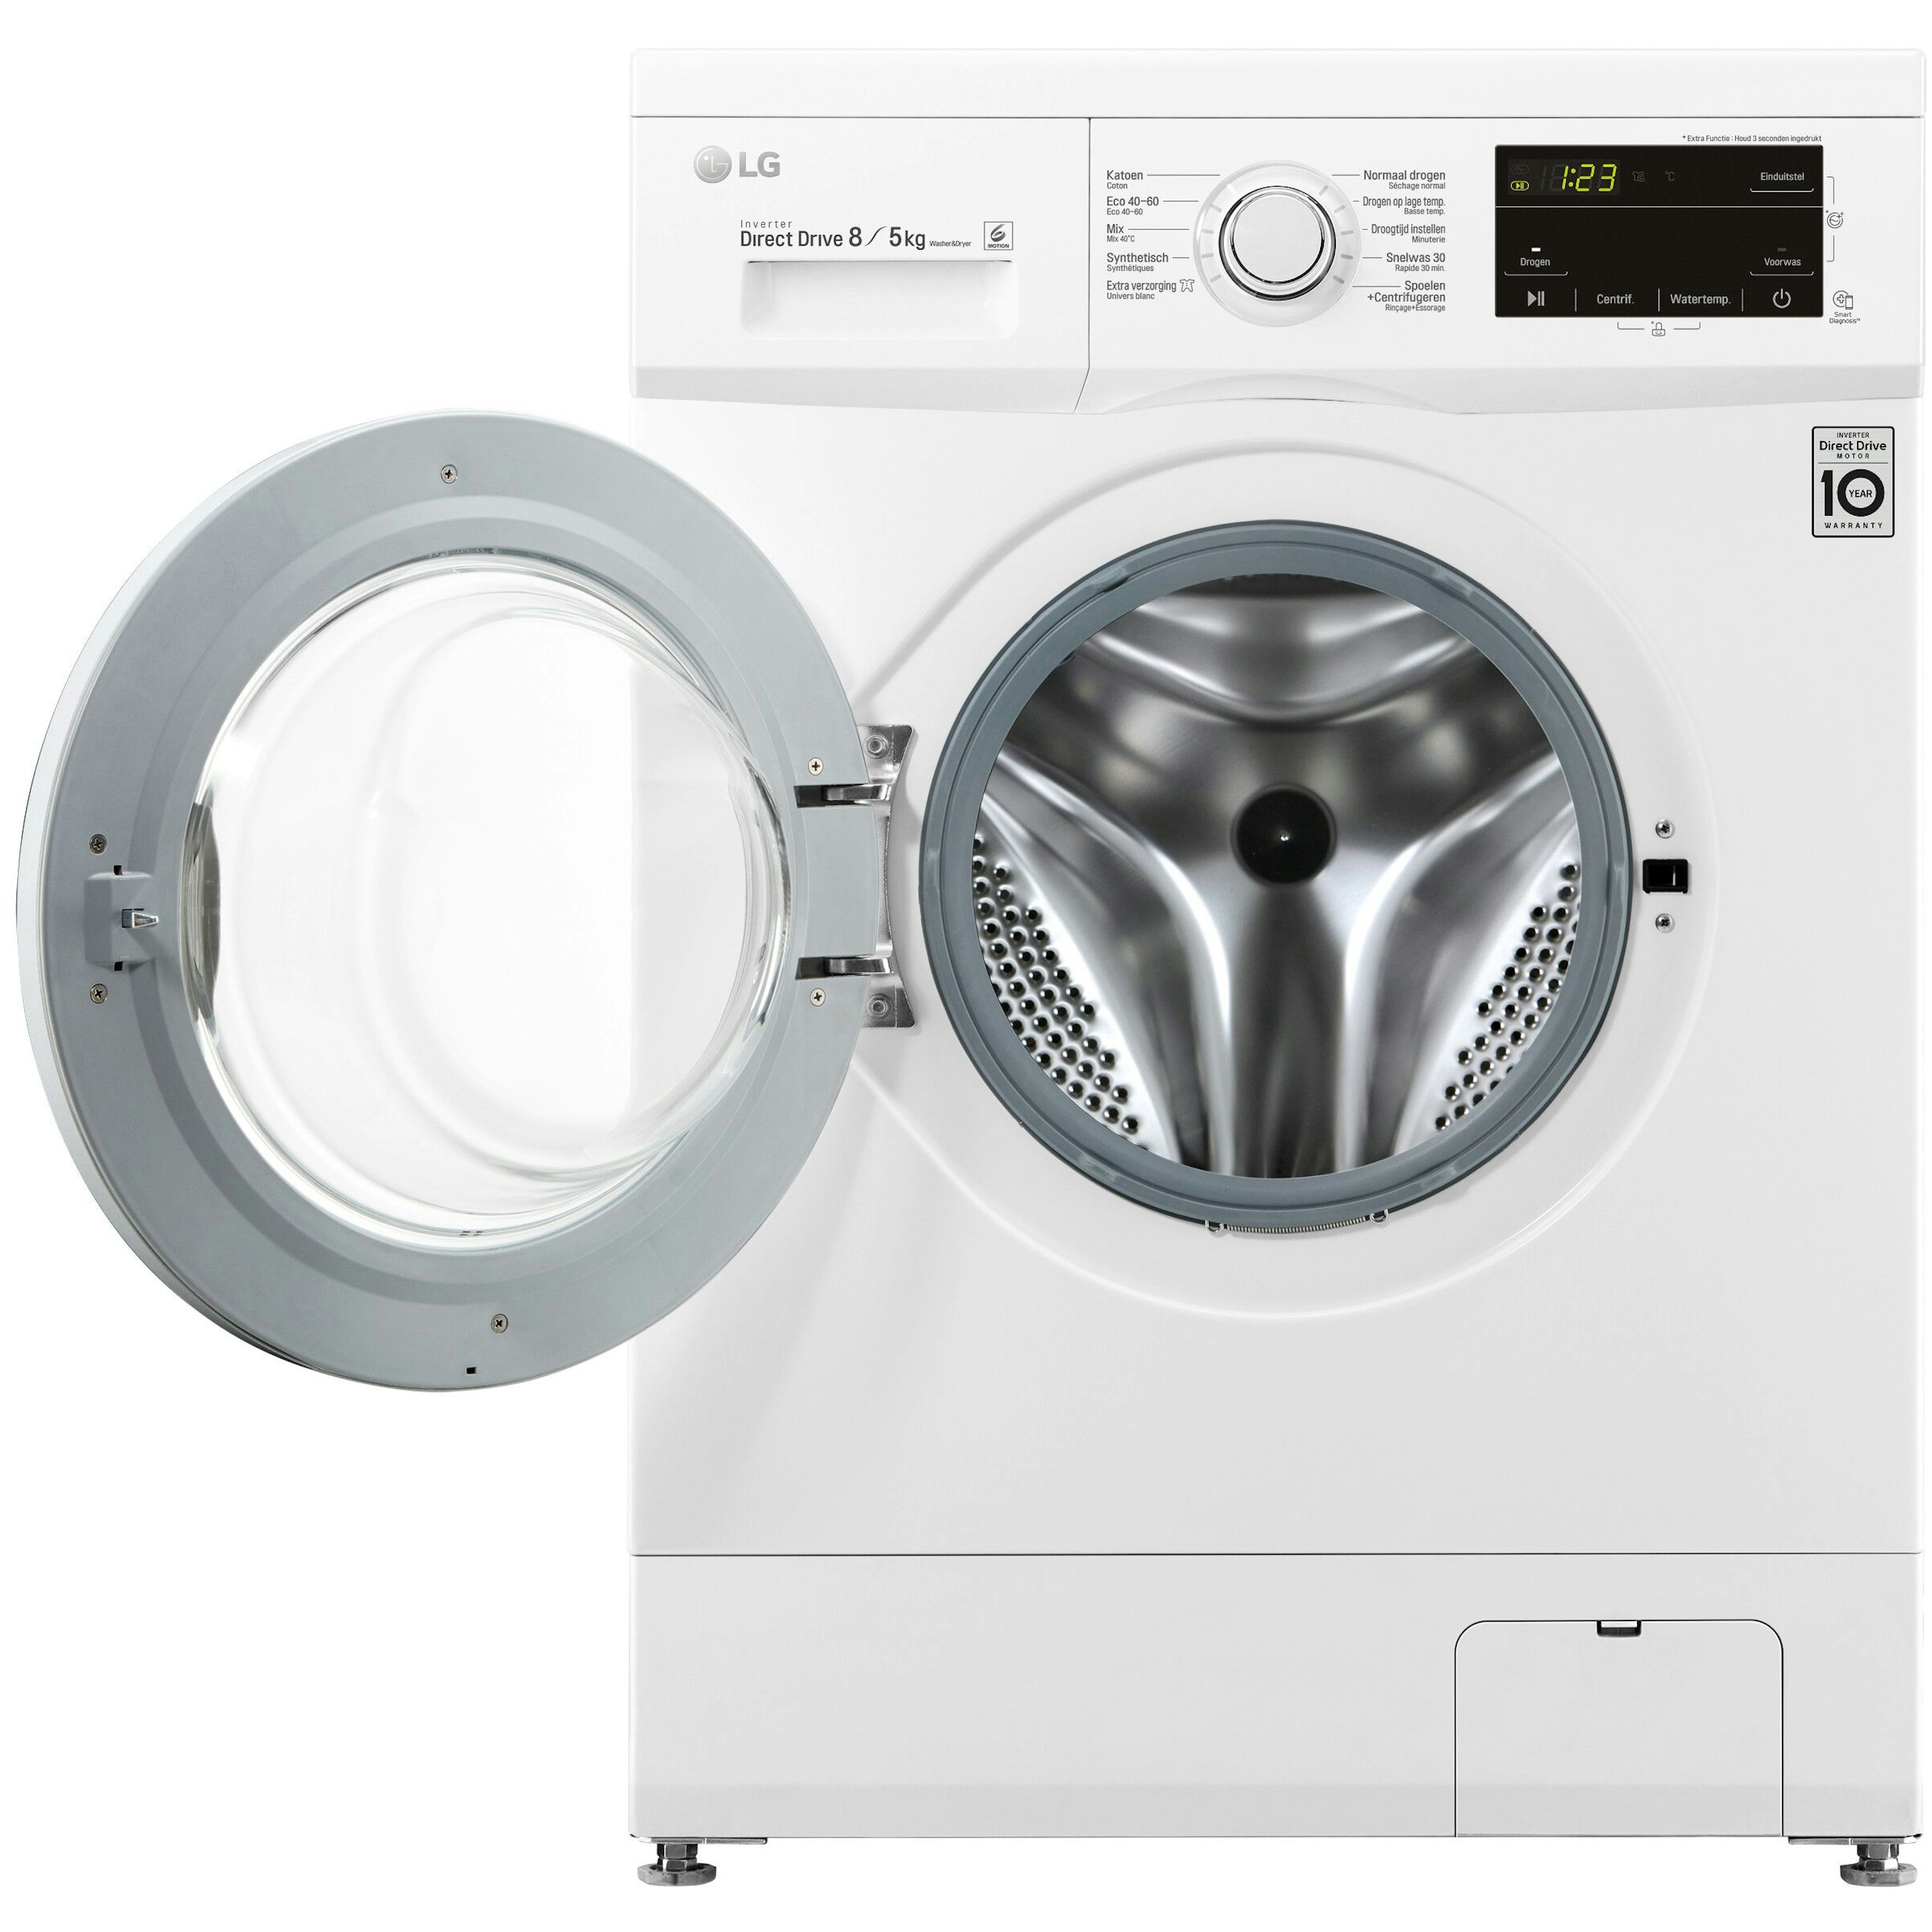 LG wasmachine  GD3M108N3 afbeelding 4